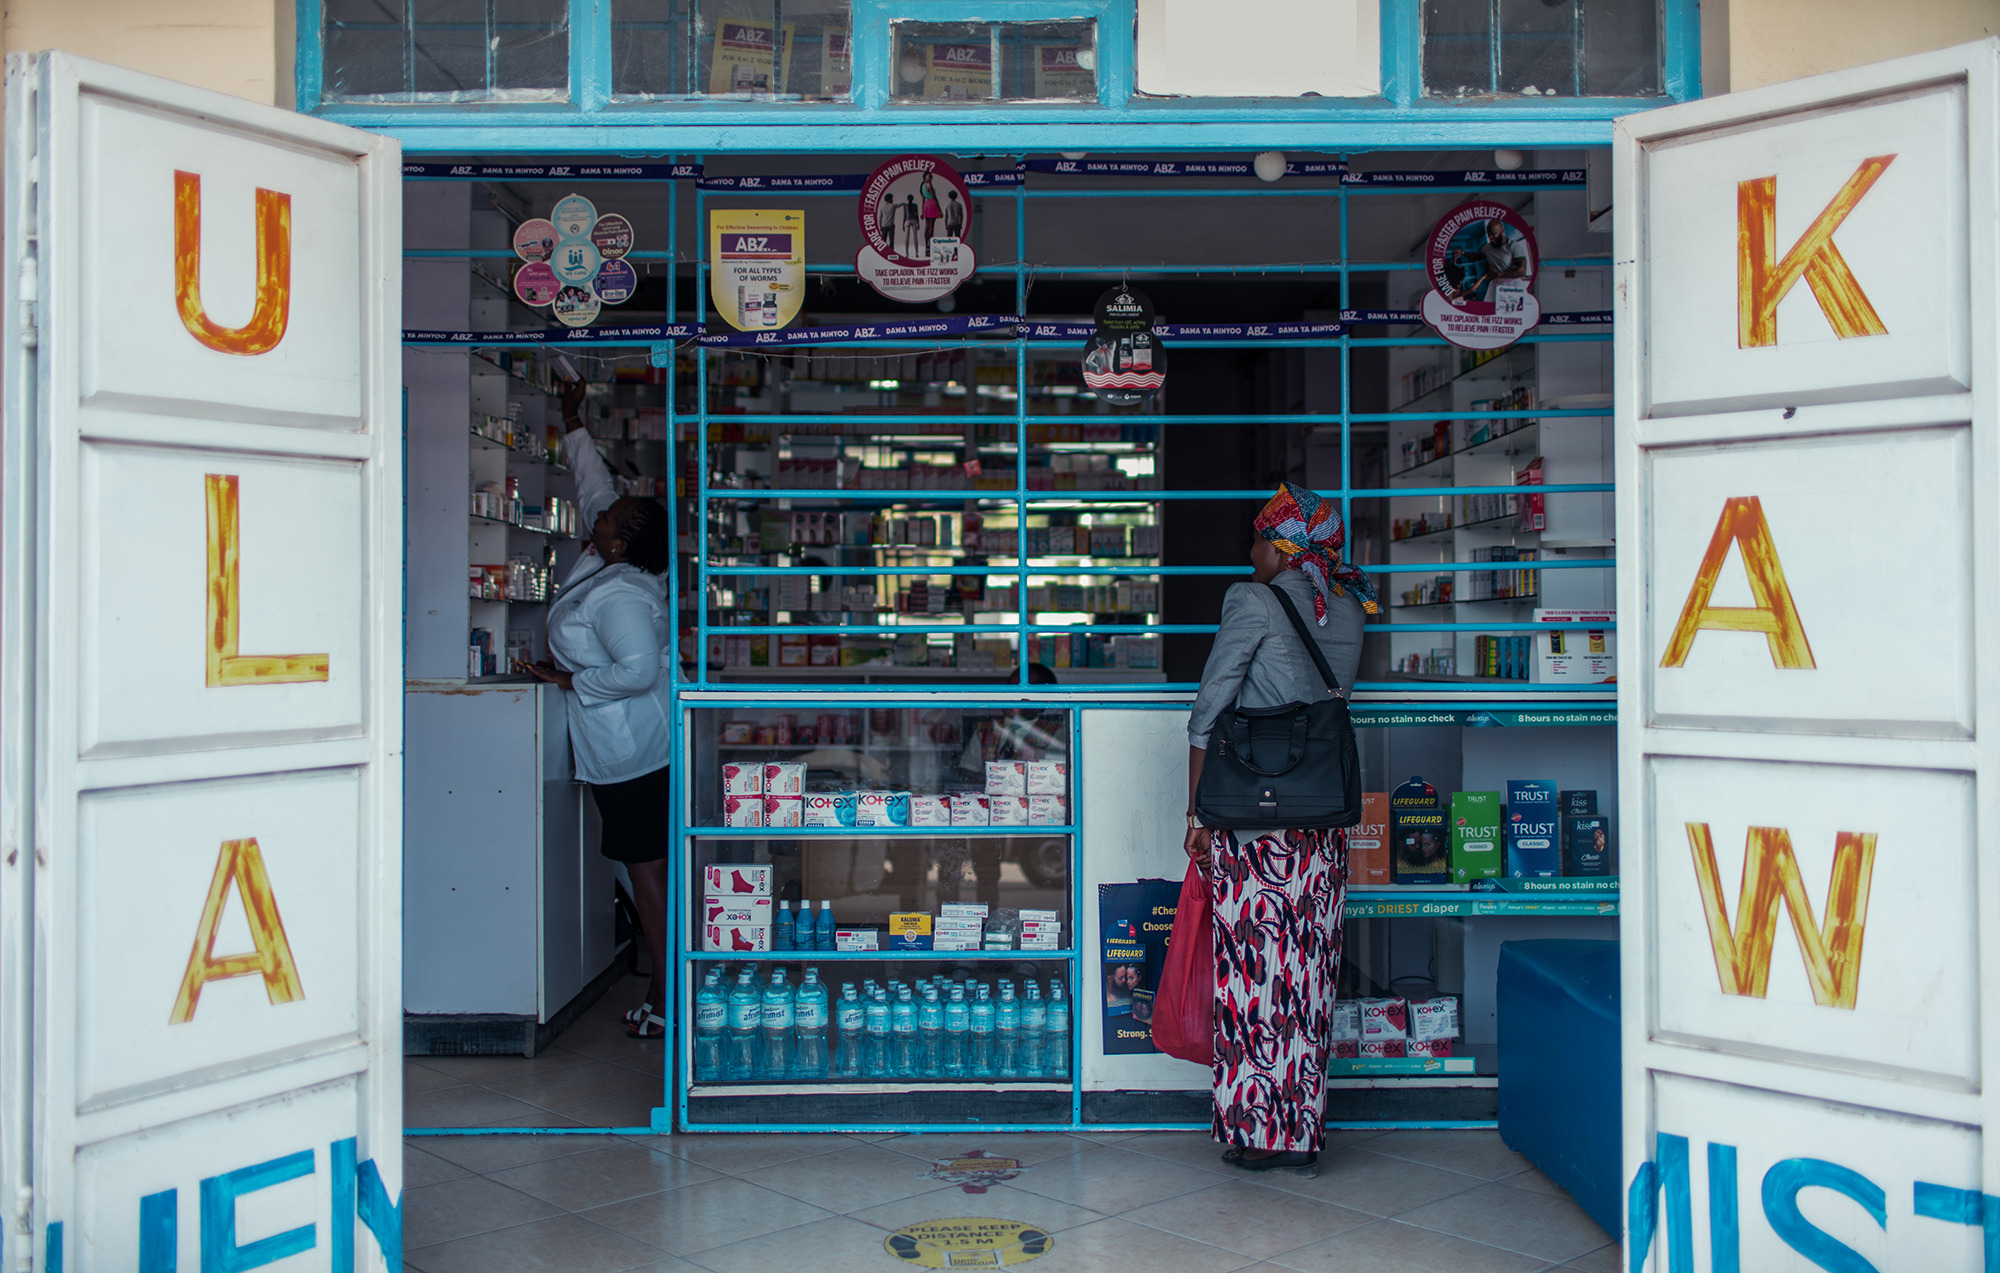 Serah's pharmacy in Nairobi, Kenya